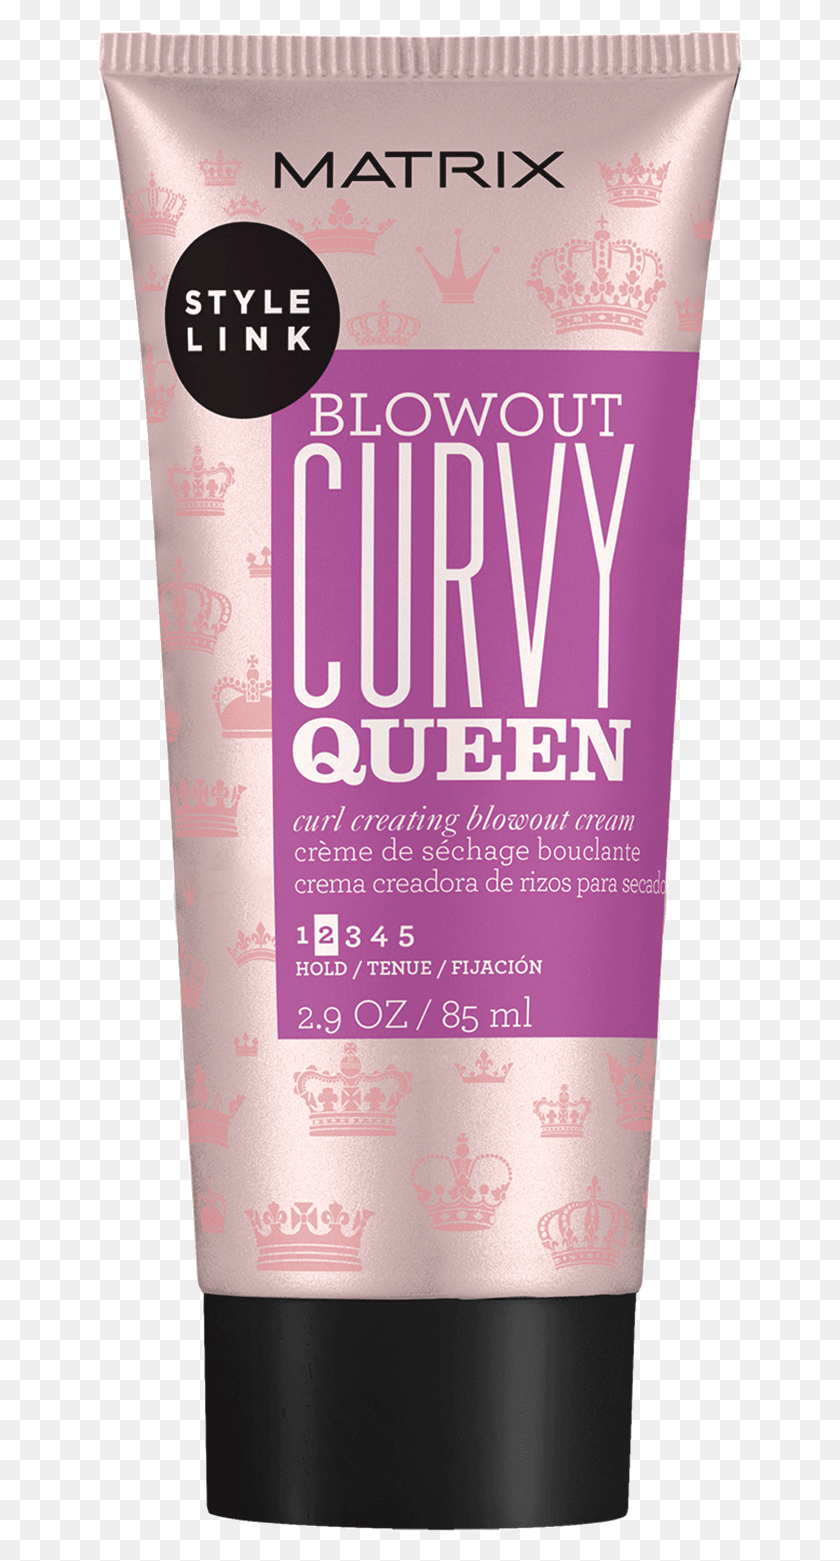 645x1501 Blowout Curvy Queen Cosmetics, Libro, Botella, Aluminio Hd Png